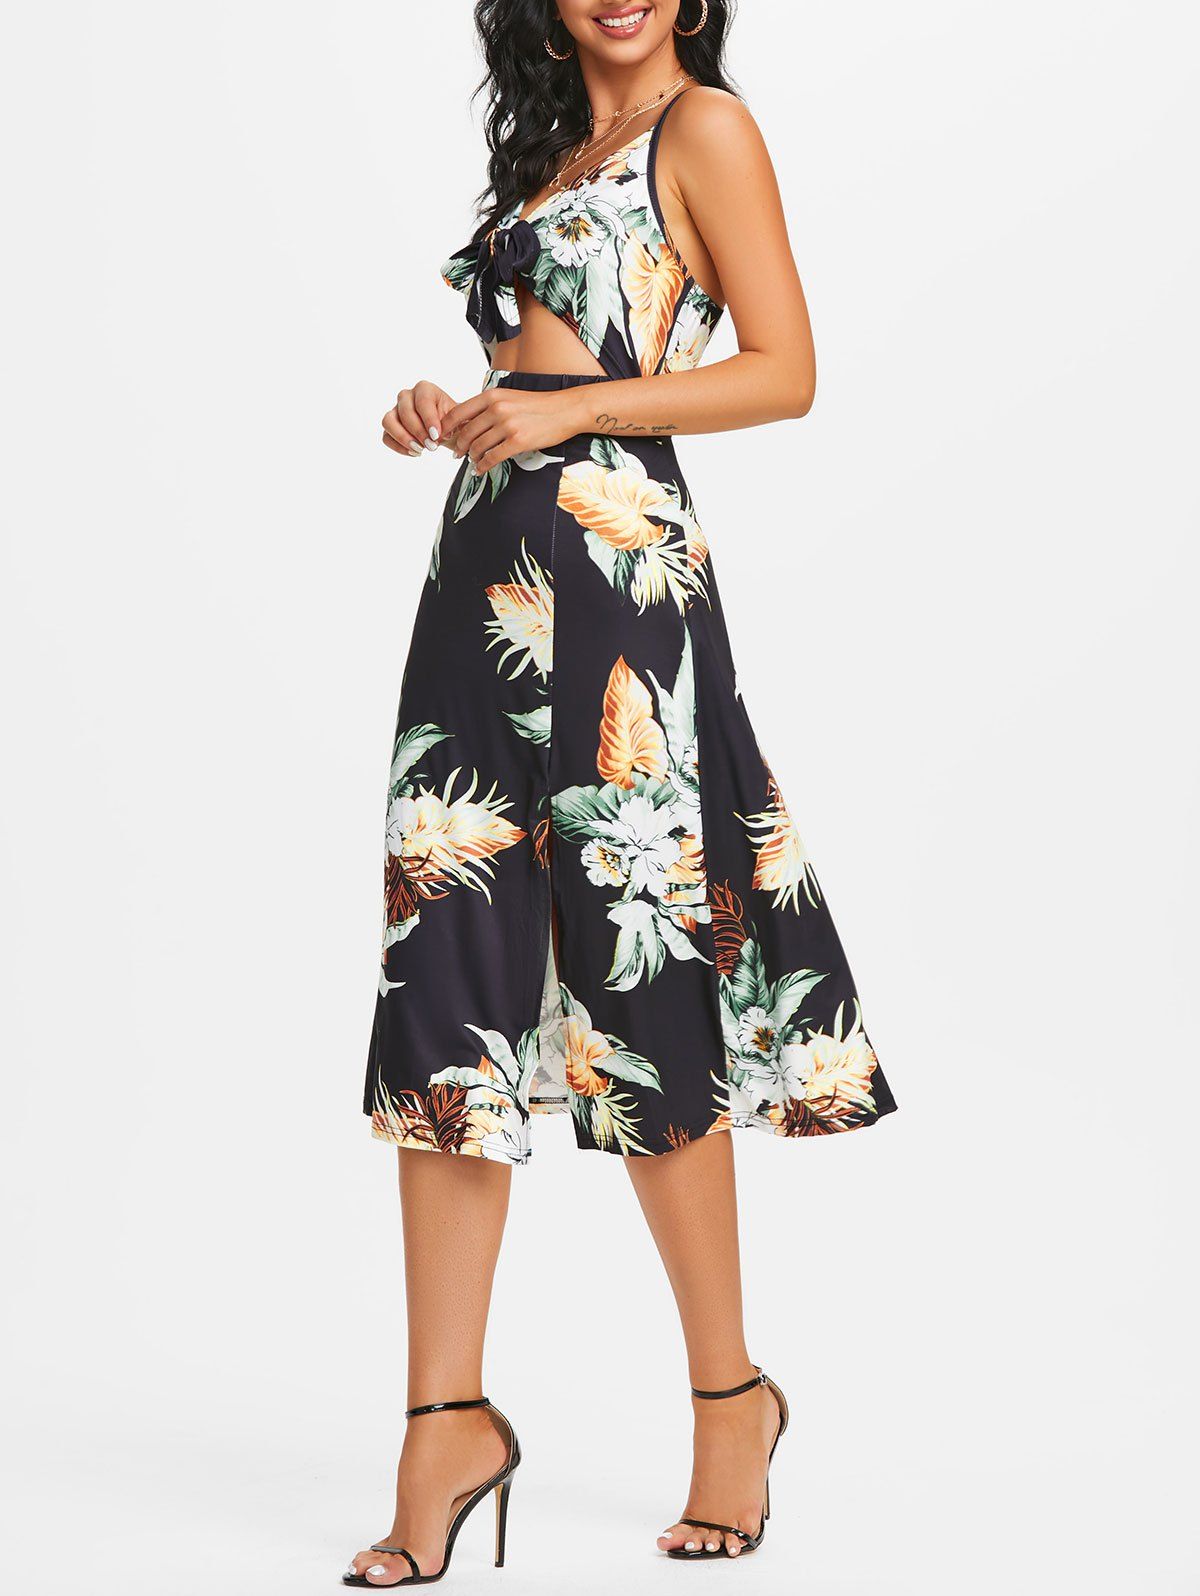 Flower Print Vacation Midi Dress Knotted Cutout Side Slit Cami Dress Adjustable Straps Backless Dress - BLACK XL